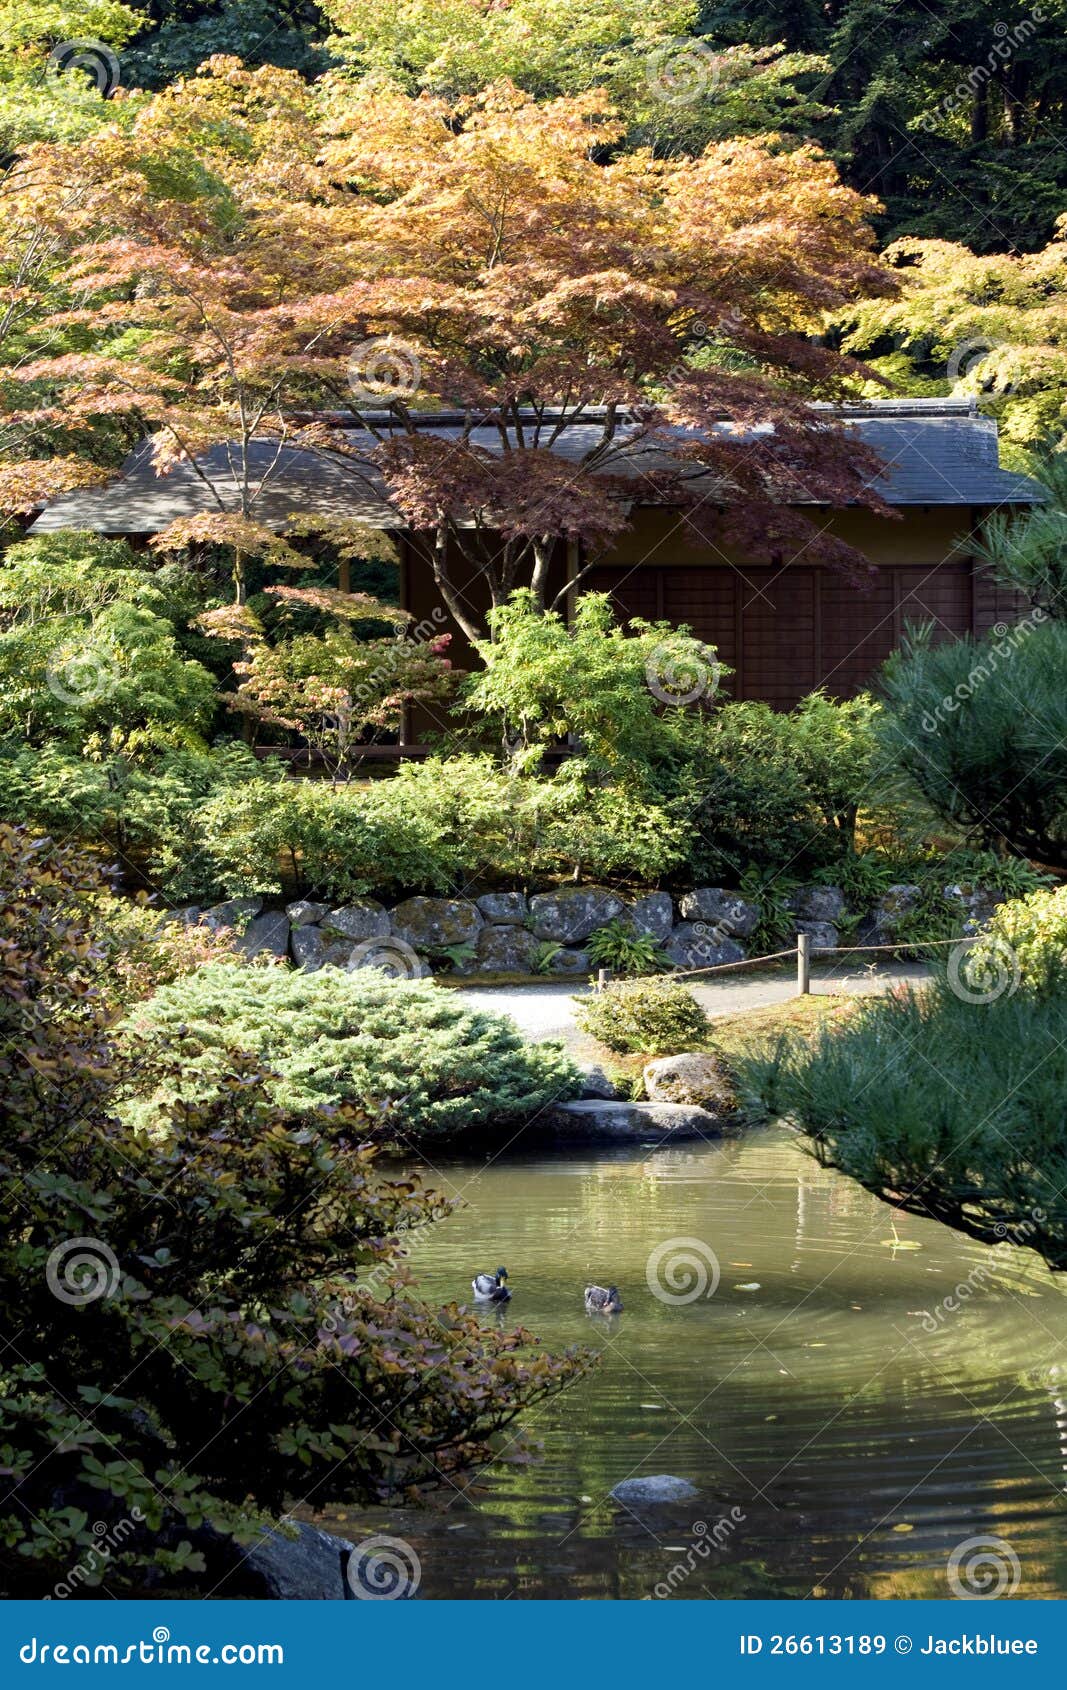 House in Japanese garden stock image. Image of summer - 26613189